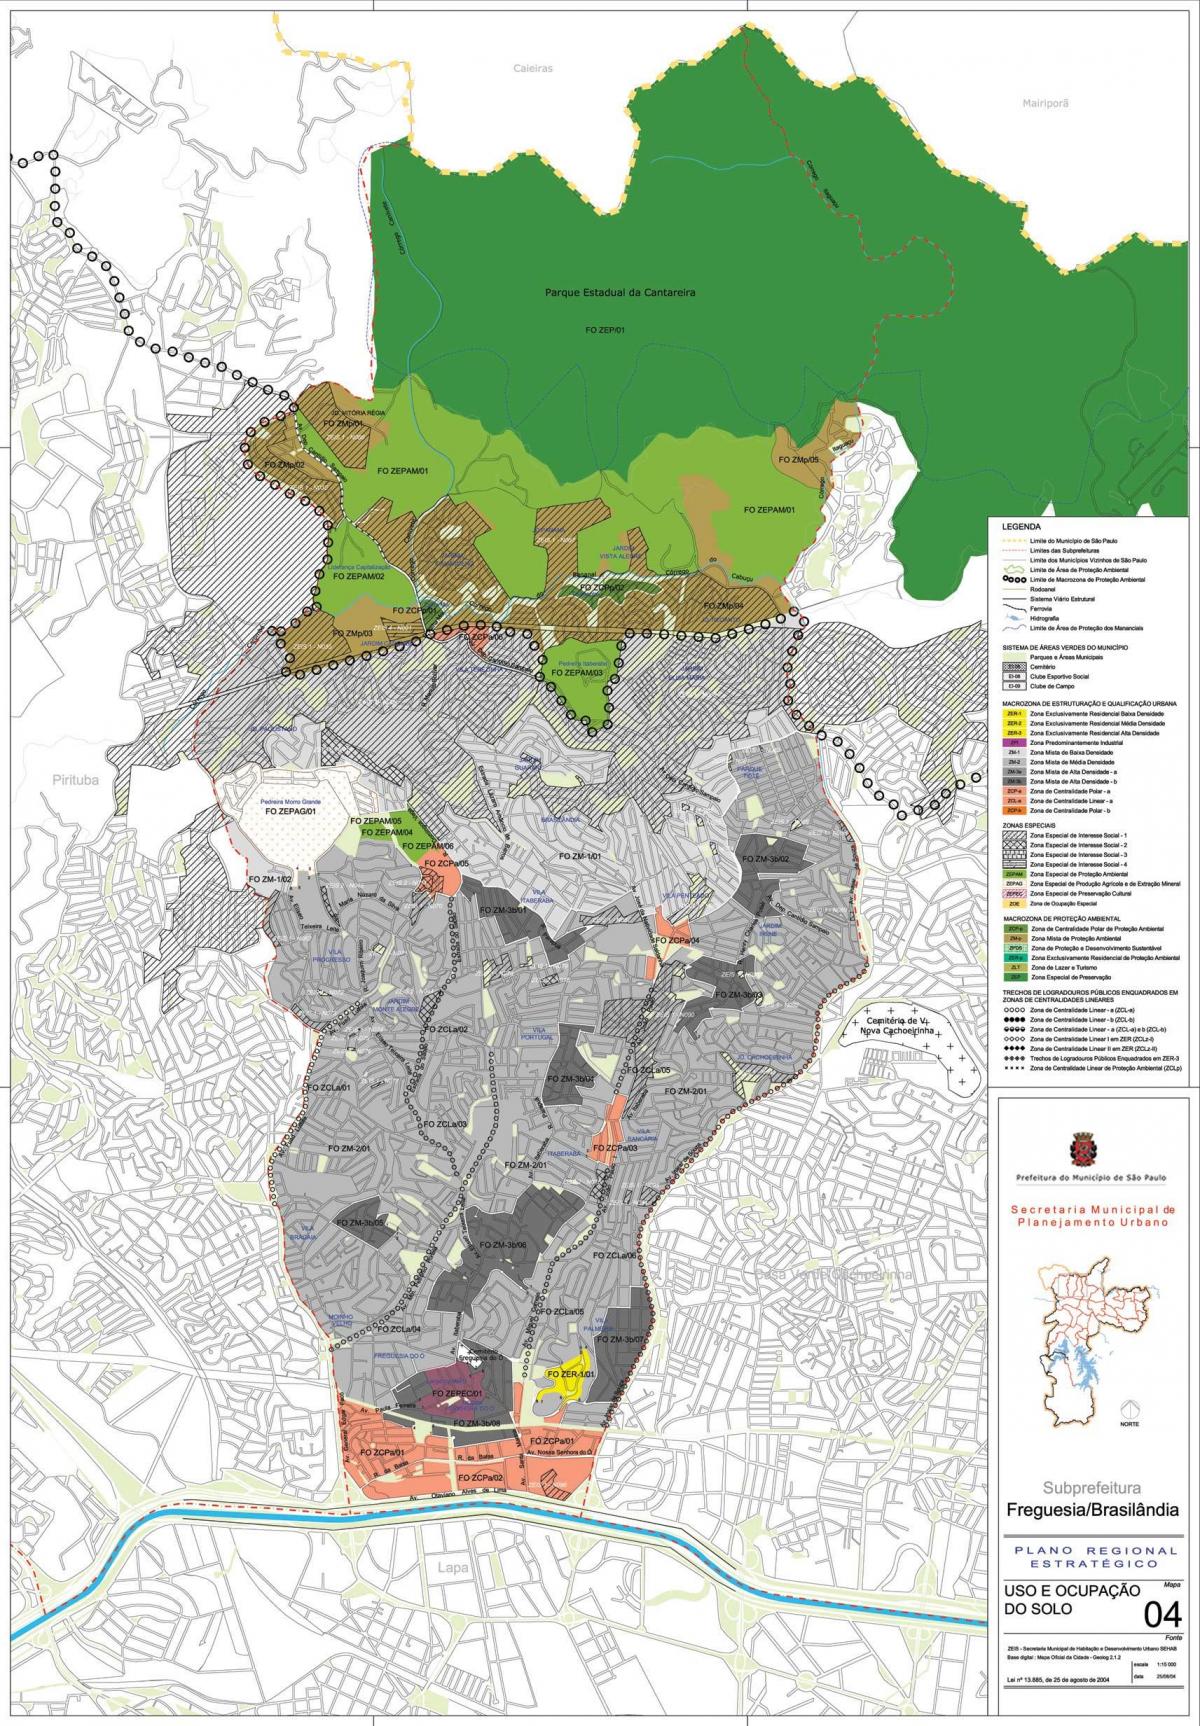 Map of Freguesia do Ó São Paulo - Occupation of the soil